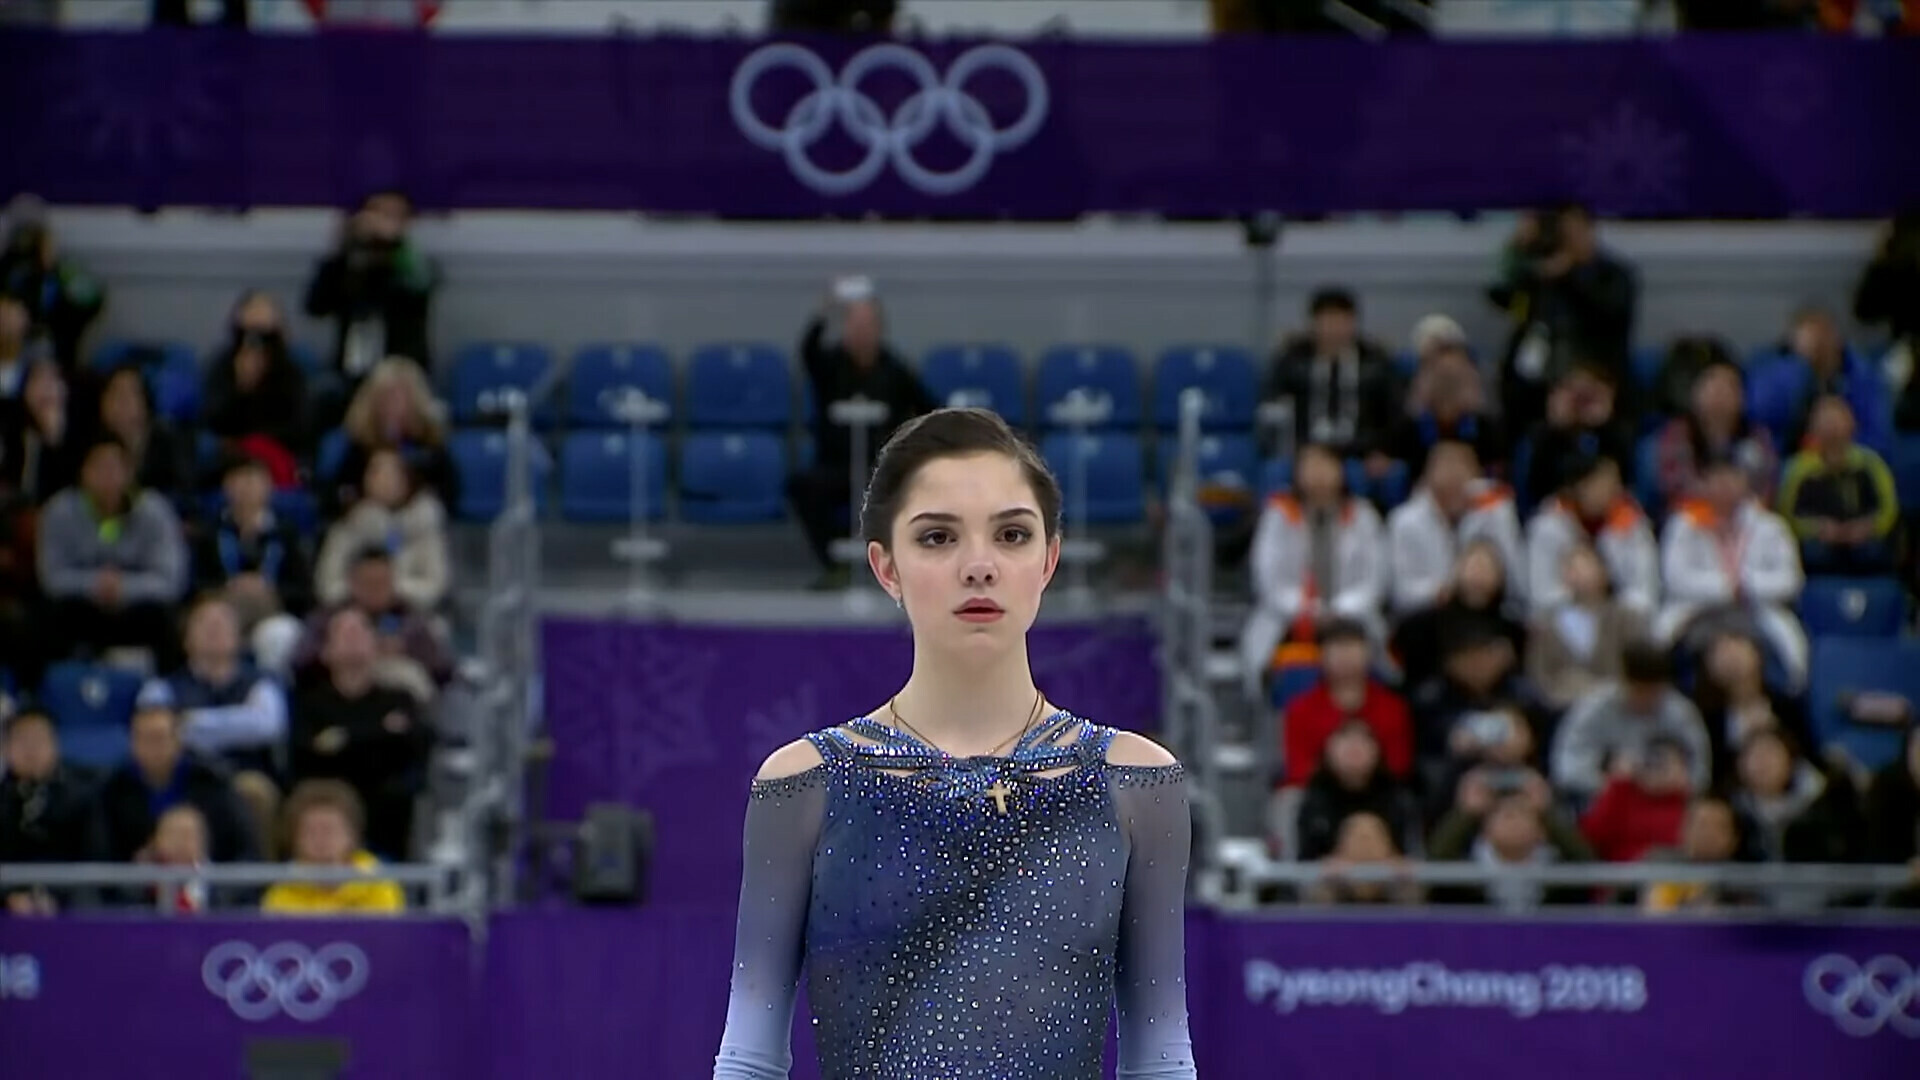 Evgenia Medvedeva: PyeongChang 2018, She won gold at the 2016 Russian Championships. 1920x1080 Full HD Wallpaper.